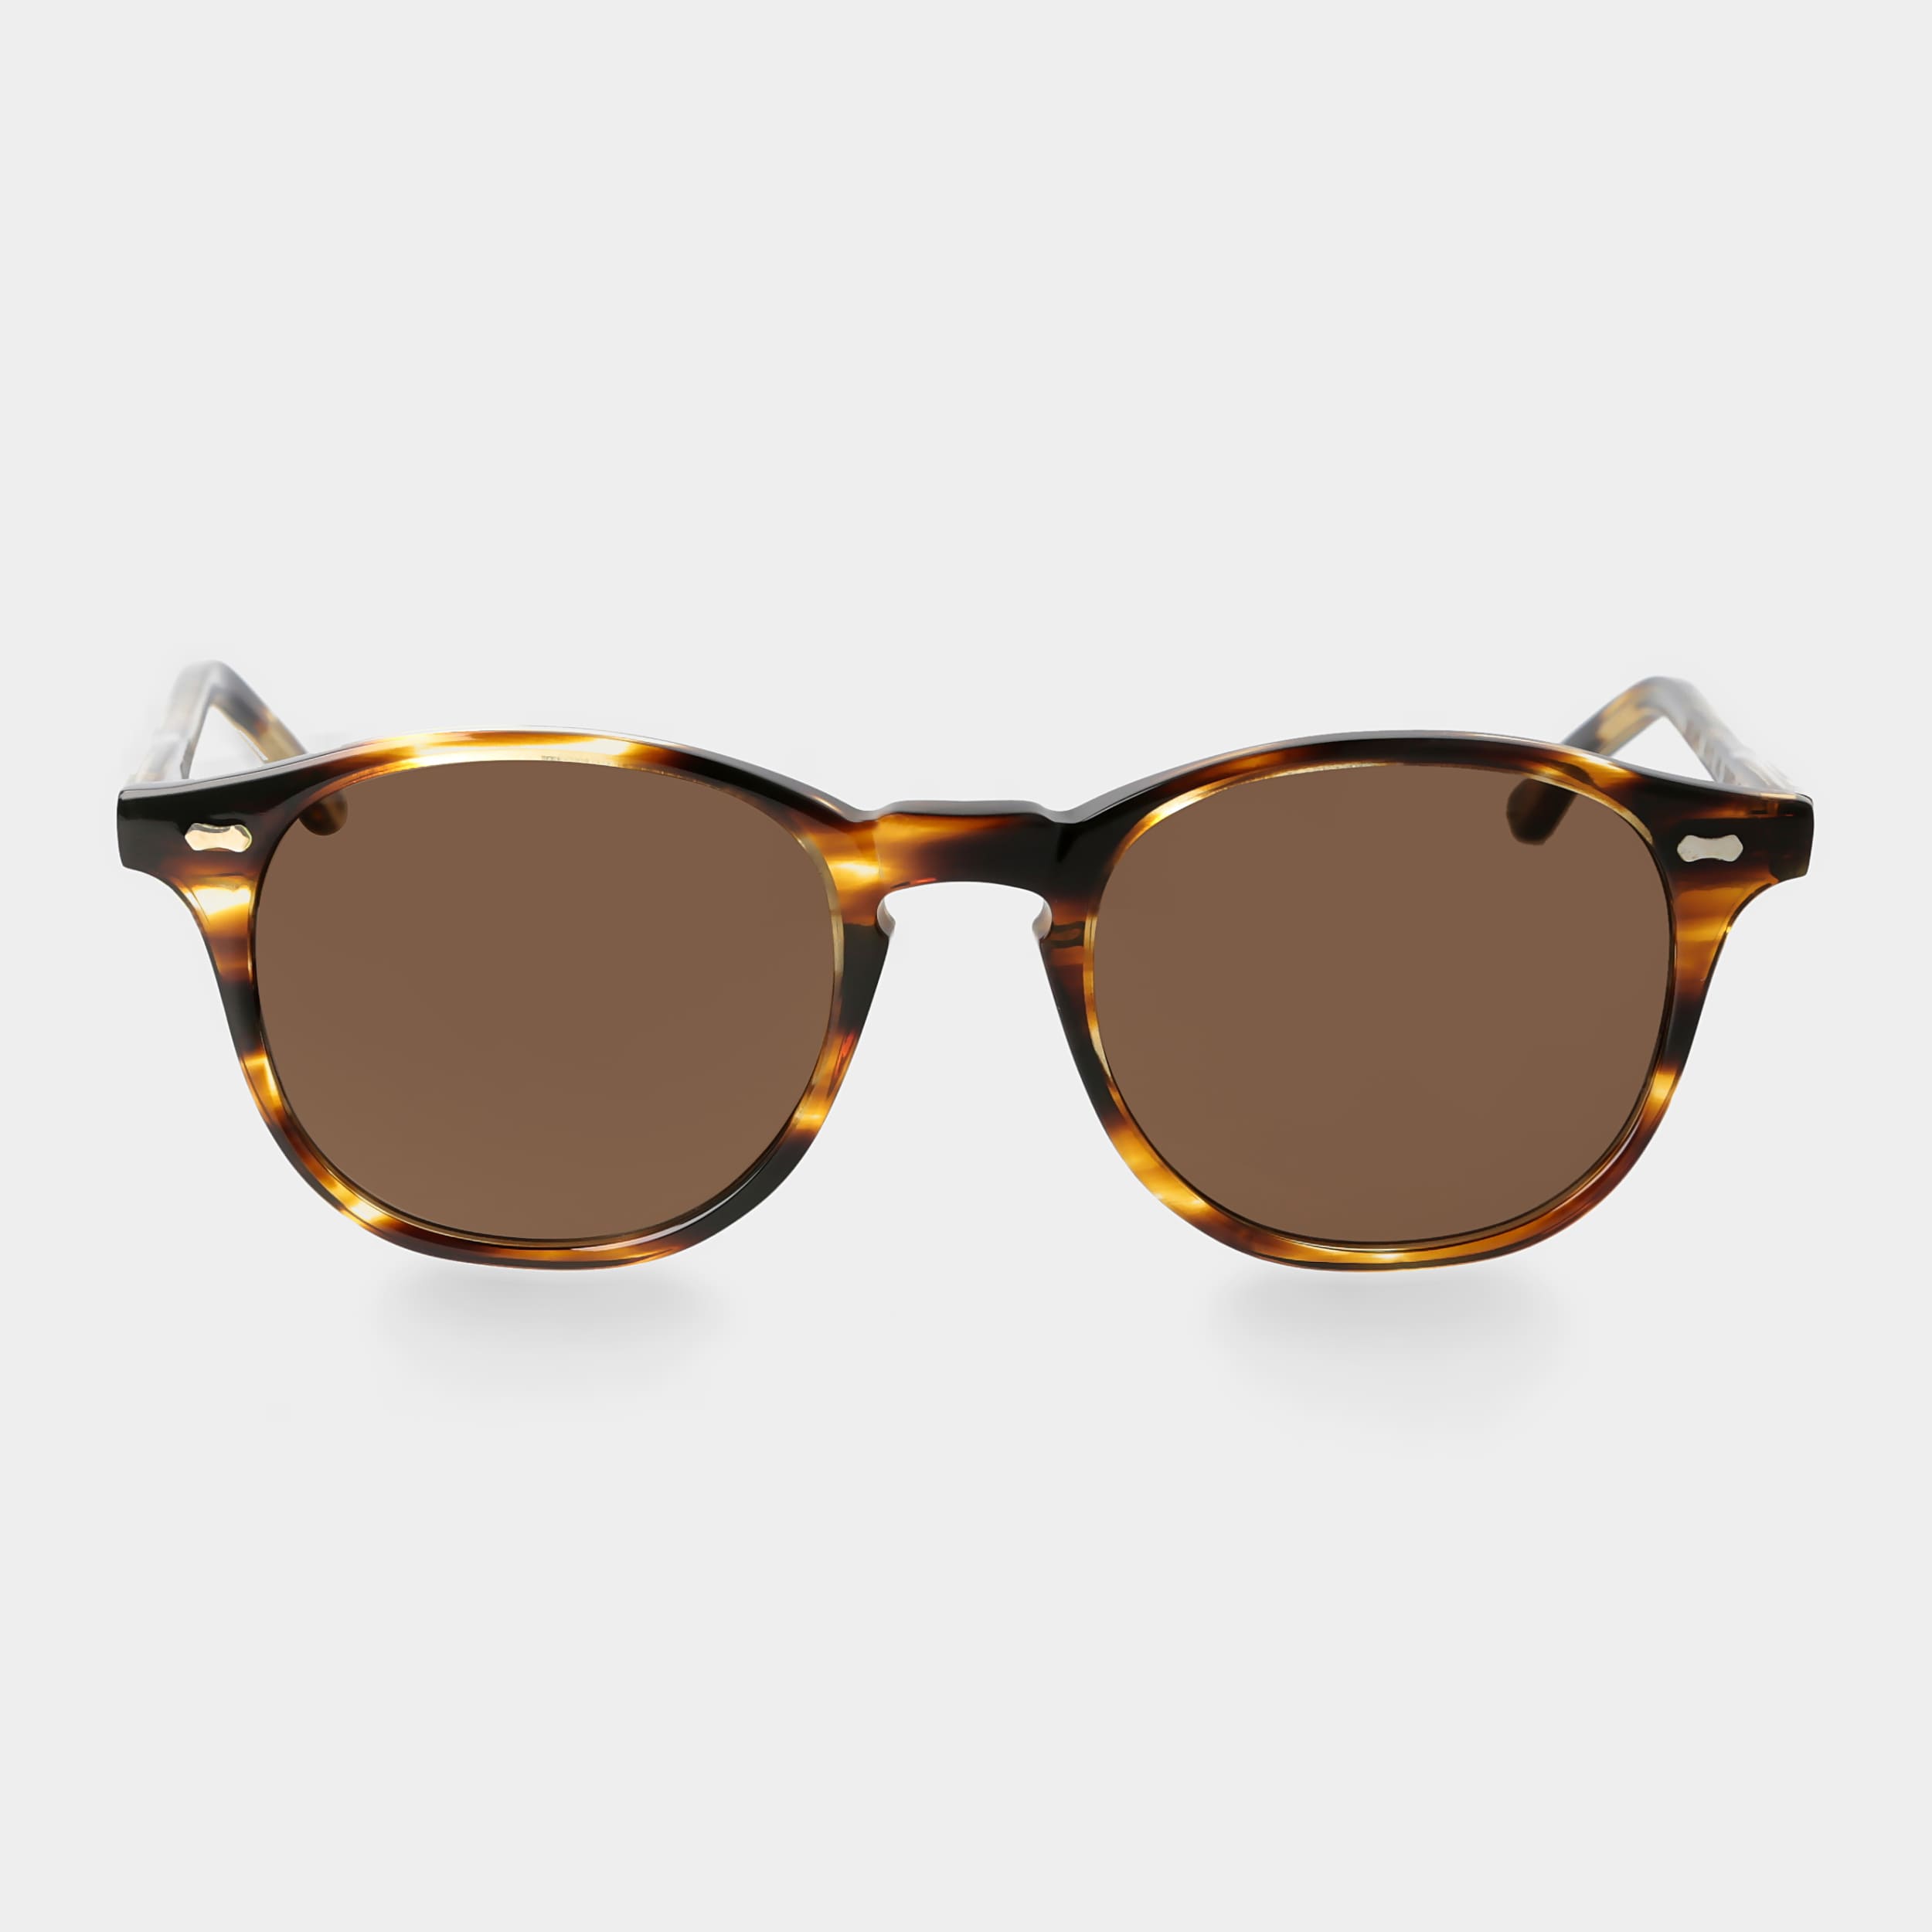 Sunglasses with Eyewear Italy Brown Lenses, | TBD in handmade